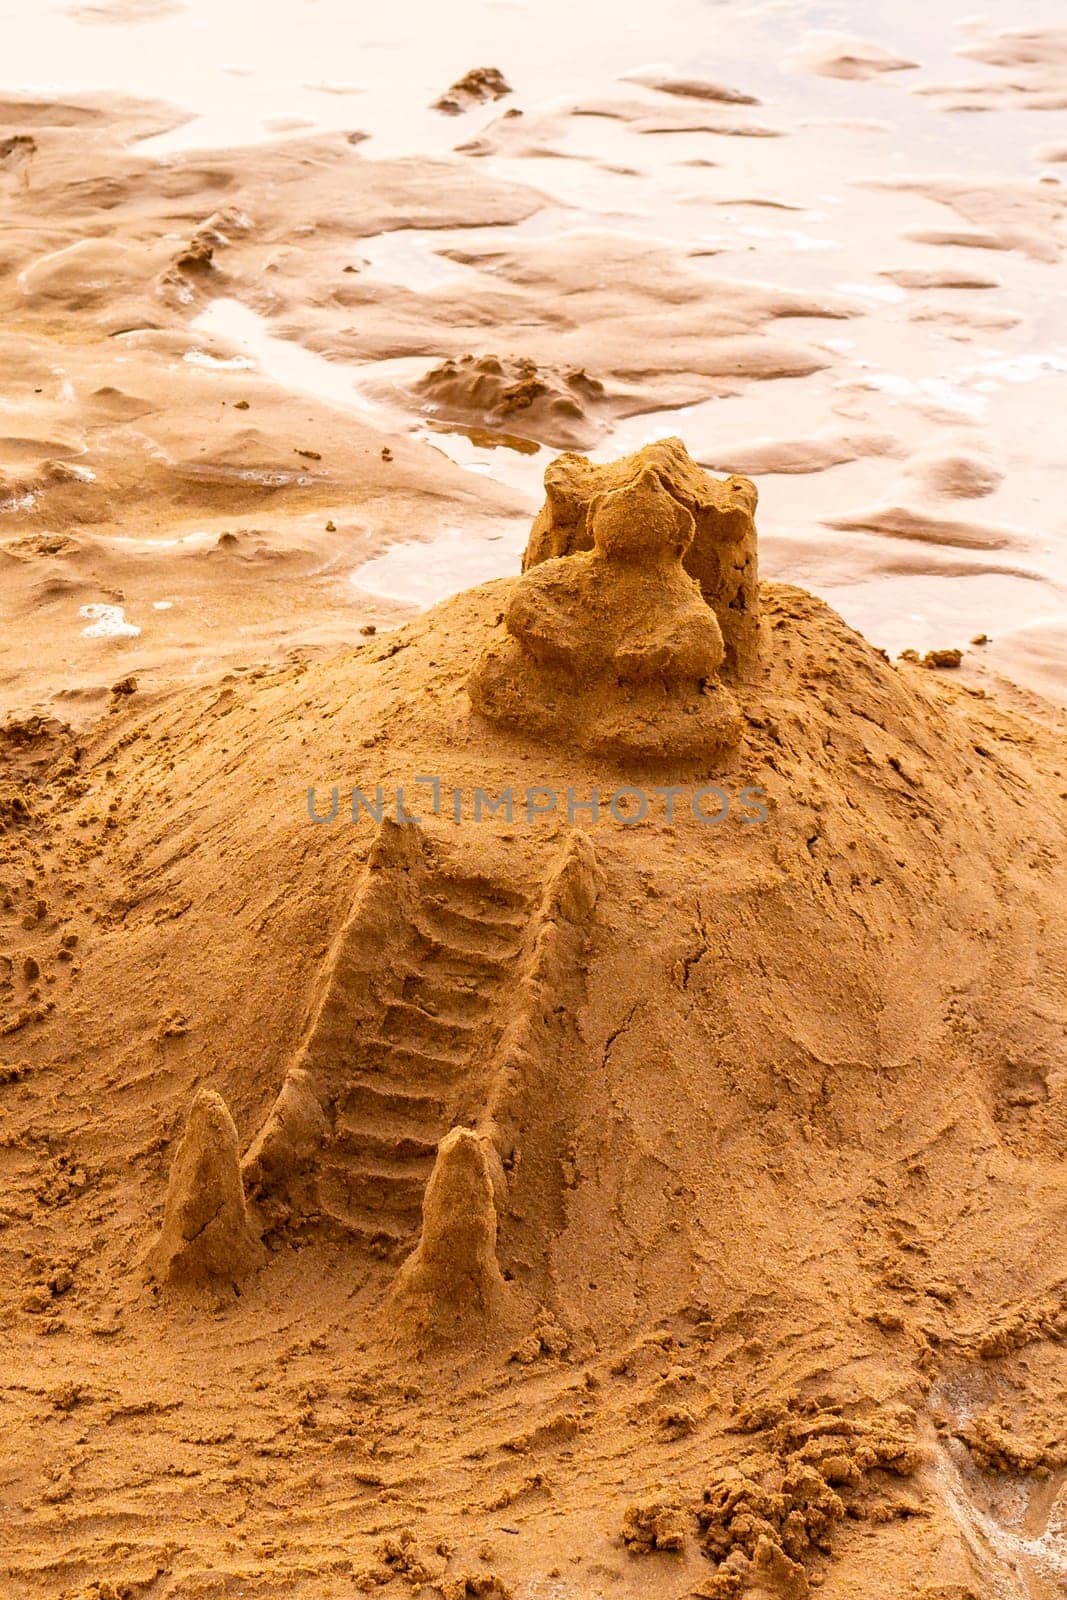 Temple of sand on the beach like a sandcastle in Bentota Beach in Sri Lanka.